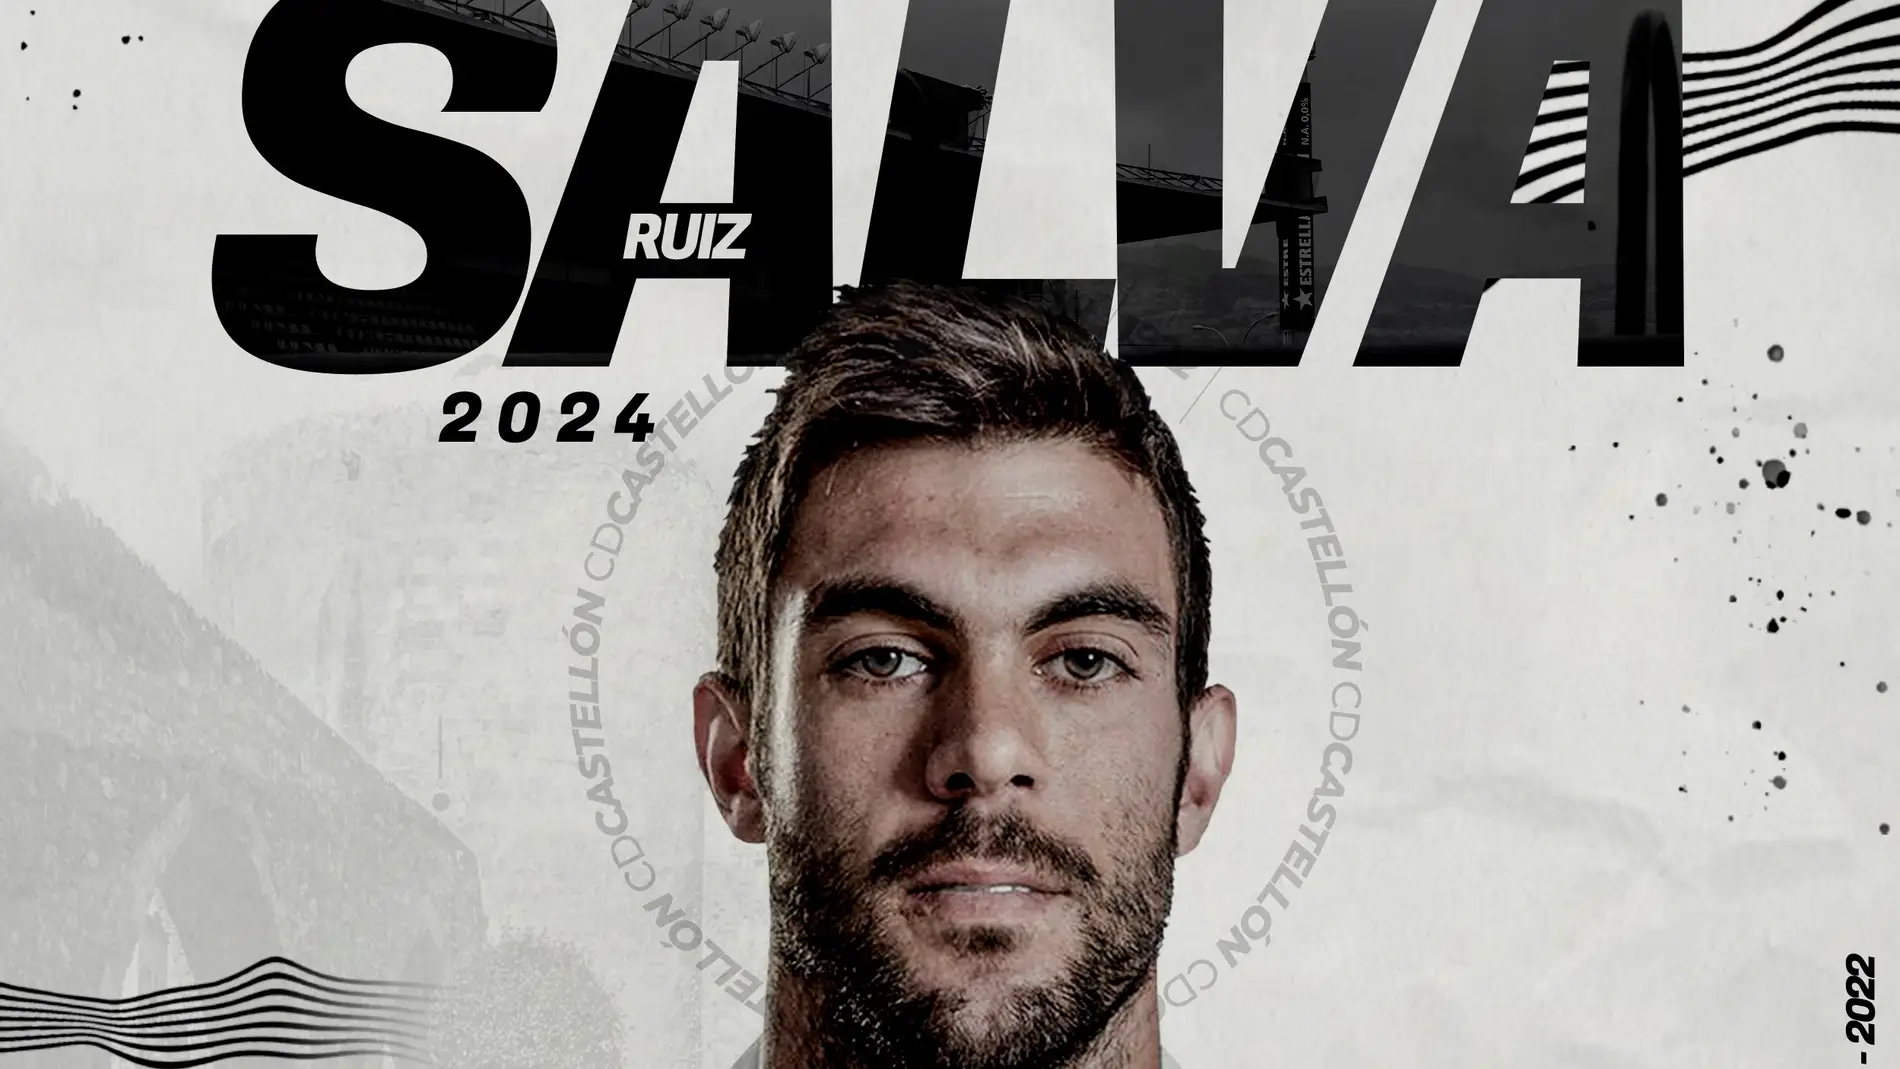 Salva Ruiz